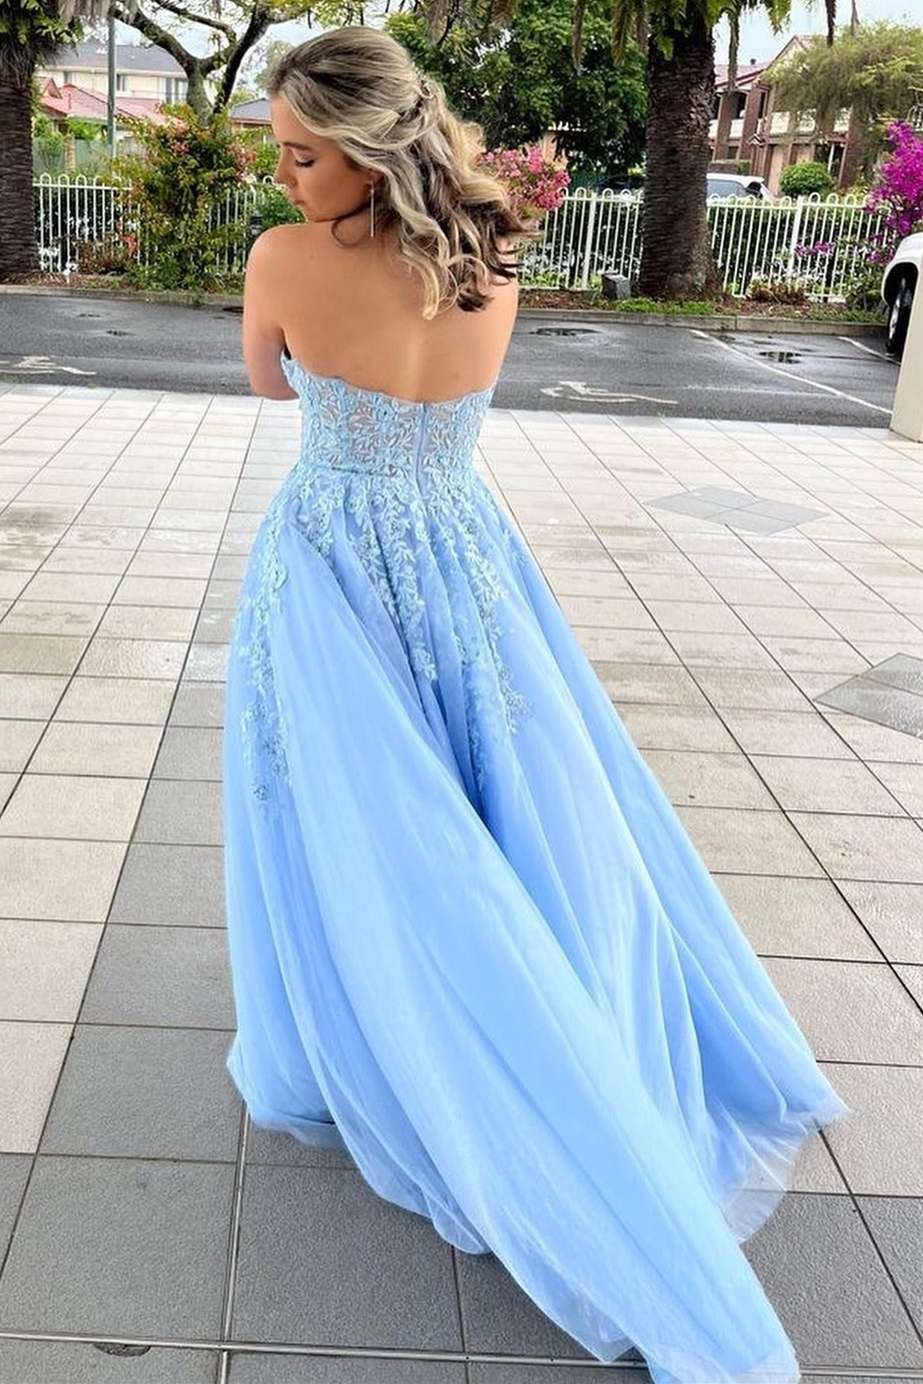 Elegant Navy Blue Floral Prom Dresses 2022 Ball Gown Square Neckline Bow  Sash Short Sleeve Backless